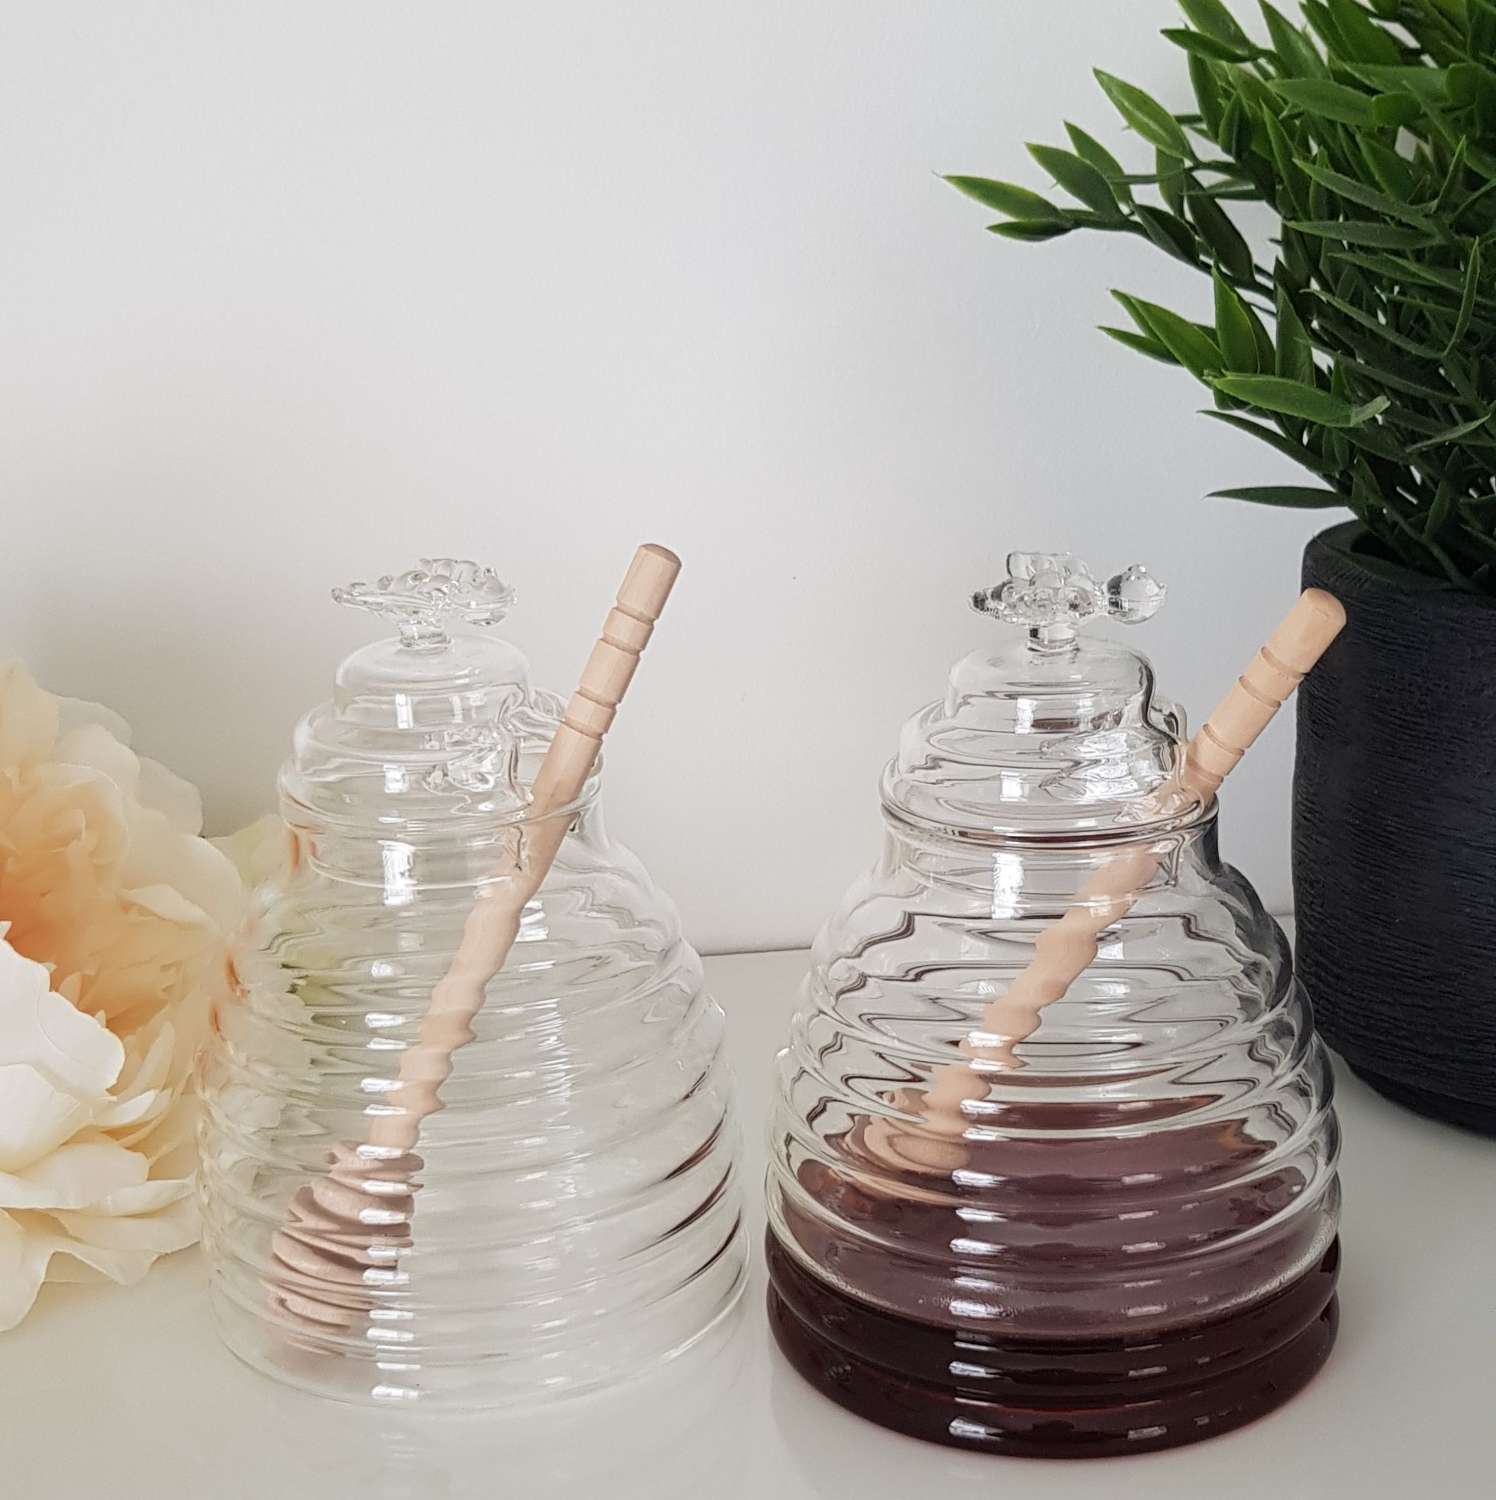 Glass honey jar with wooden stirrer